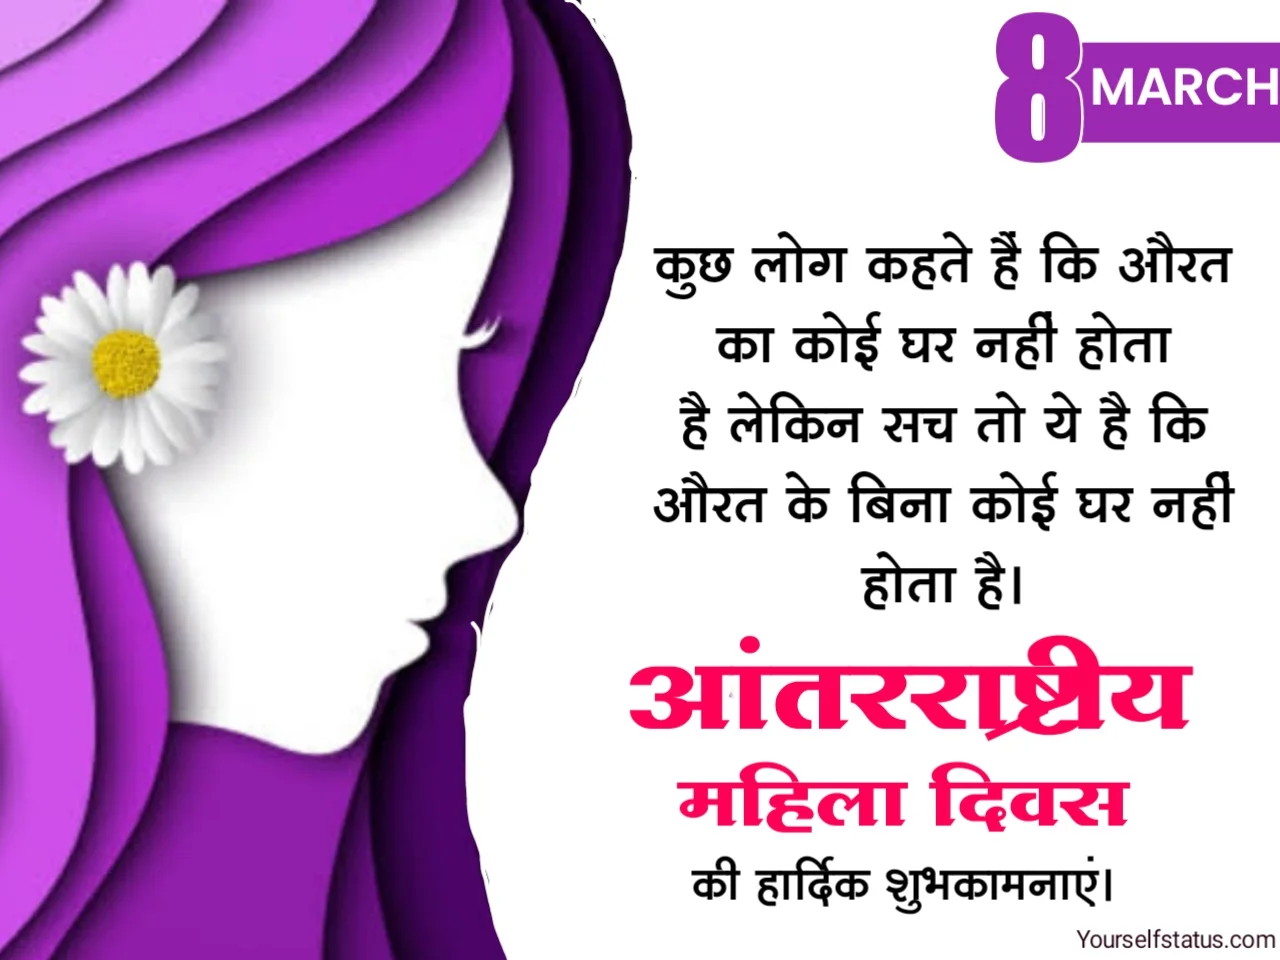 Women's Day image in hindi